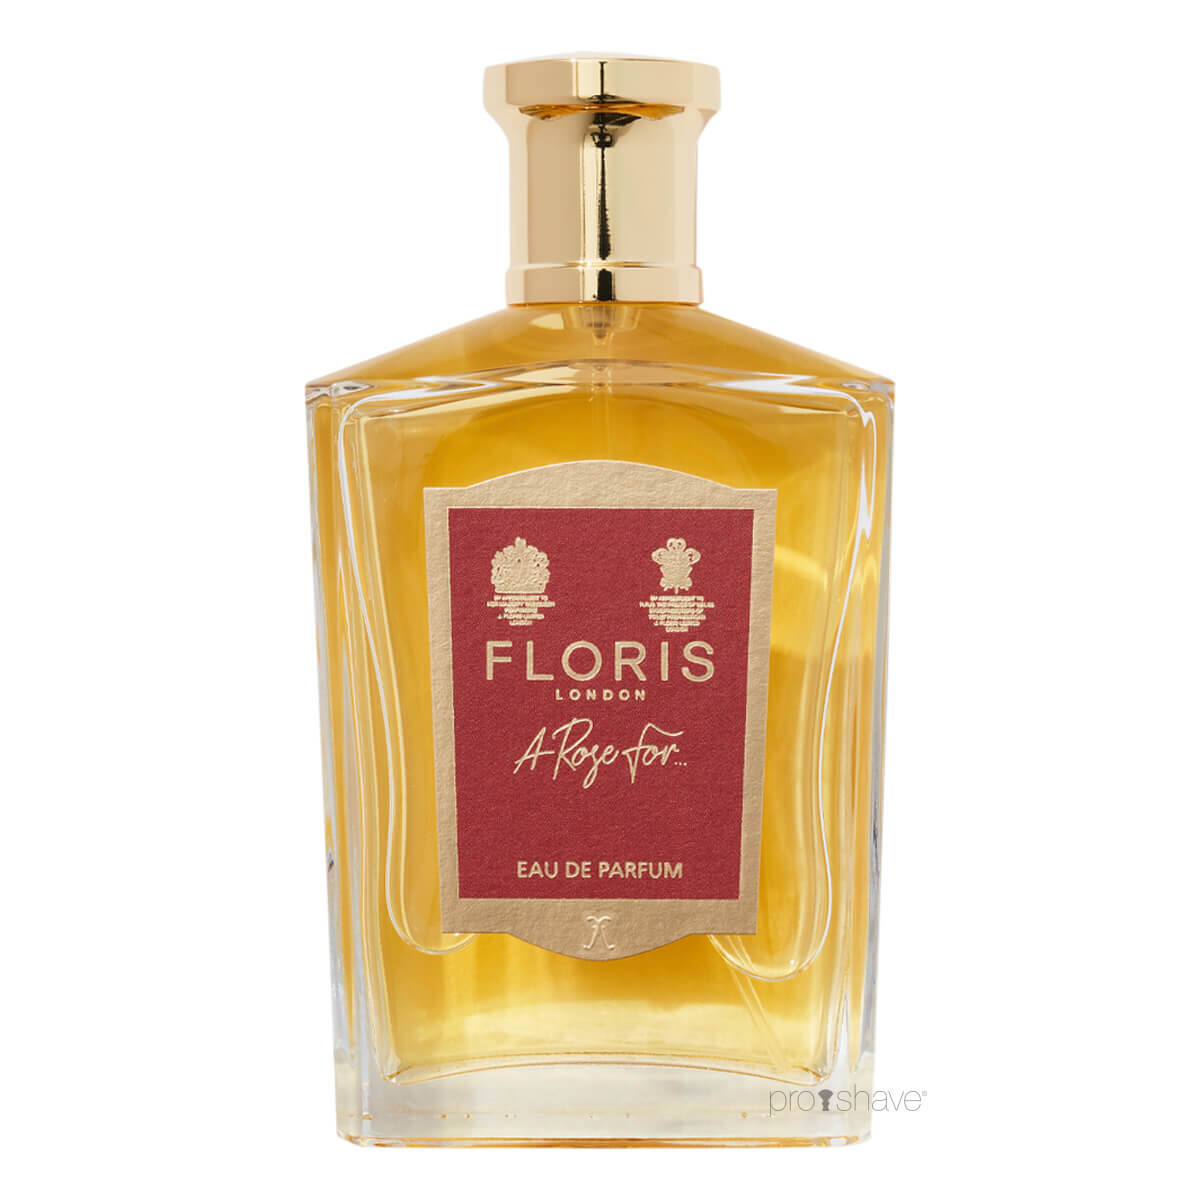 Se Floris A Rose Forâ¦, Eau de Parfum, 100 ml. hos Proshave